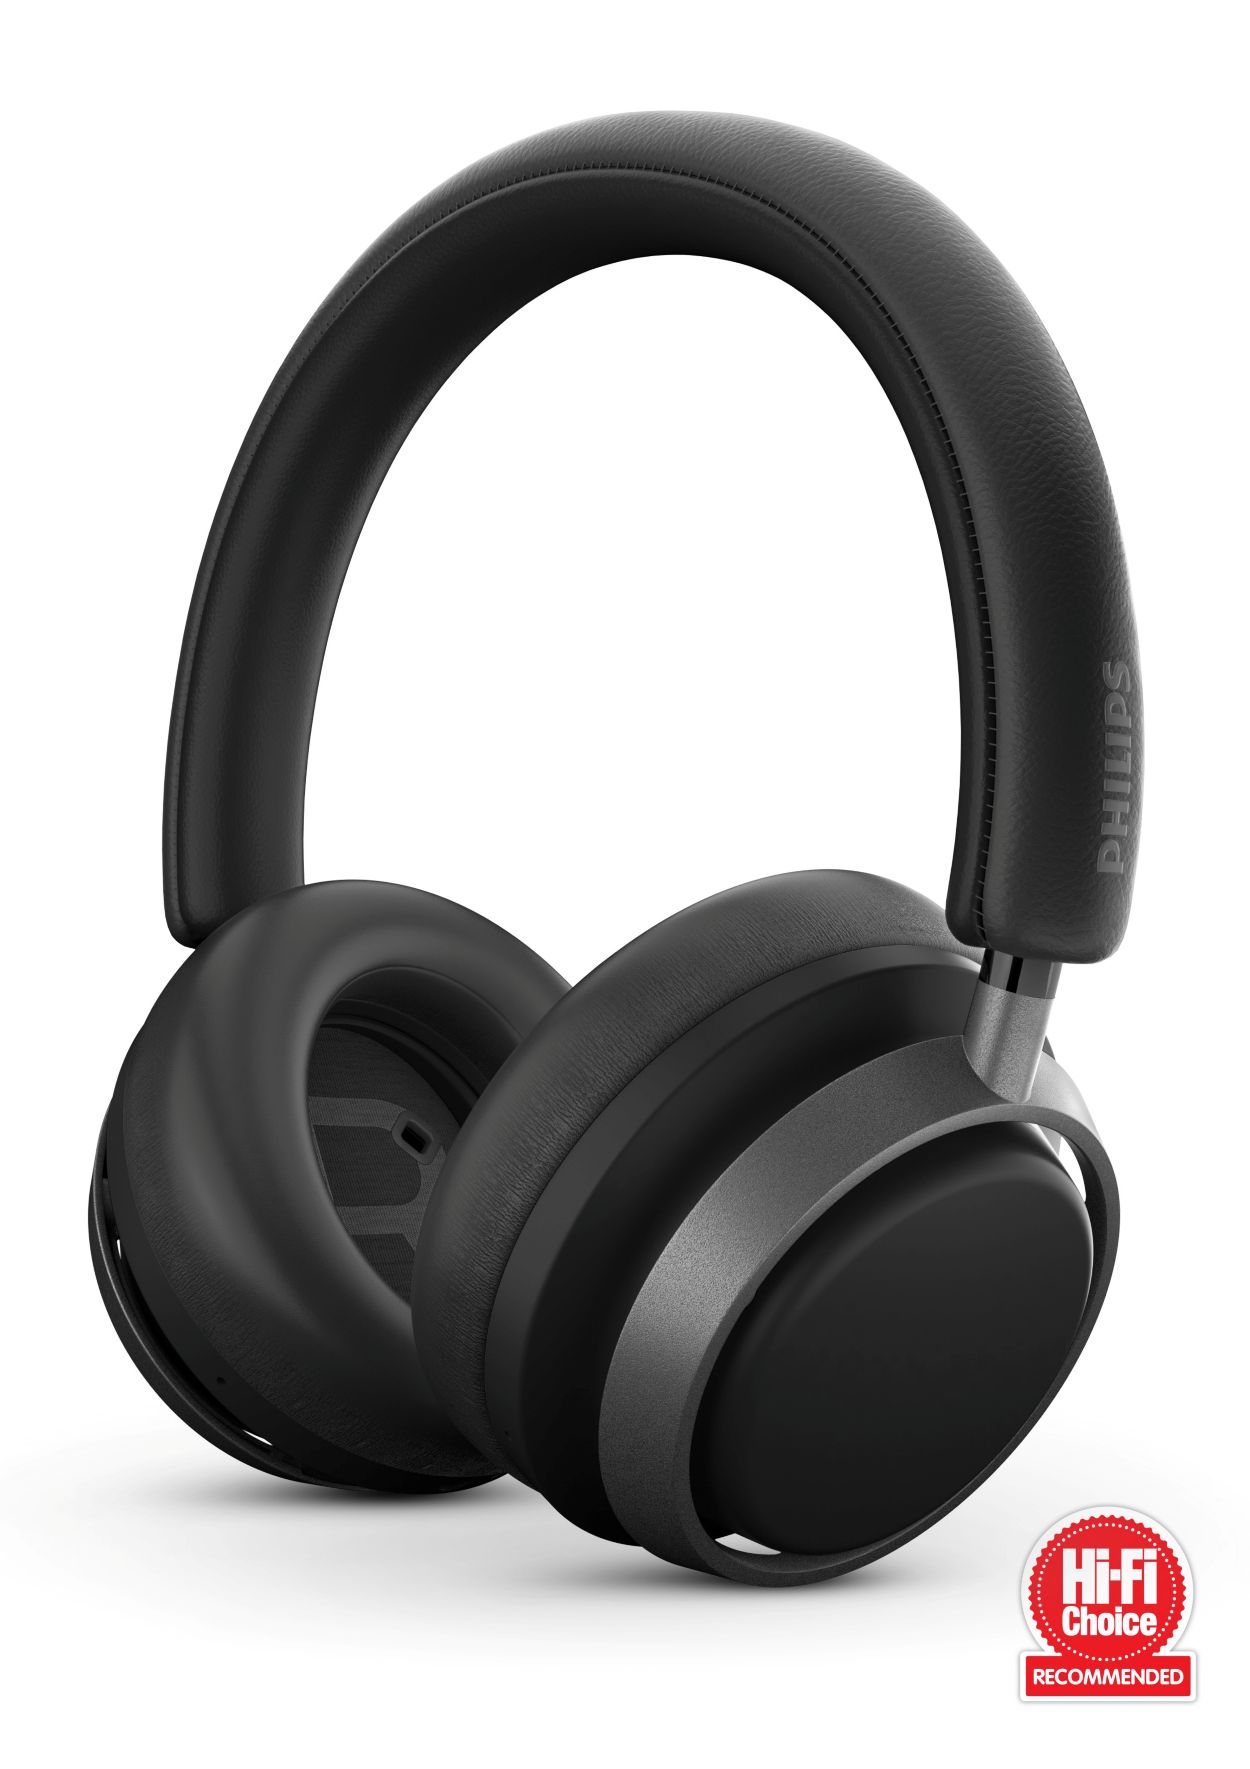 Philips Fidelio L4 ANC headphones take aim at the Sony XM5